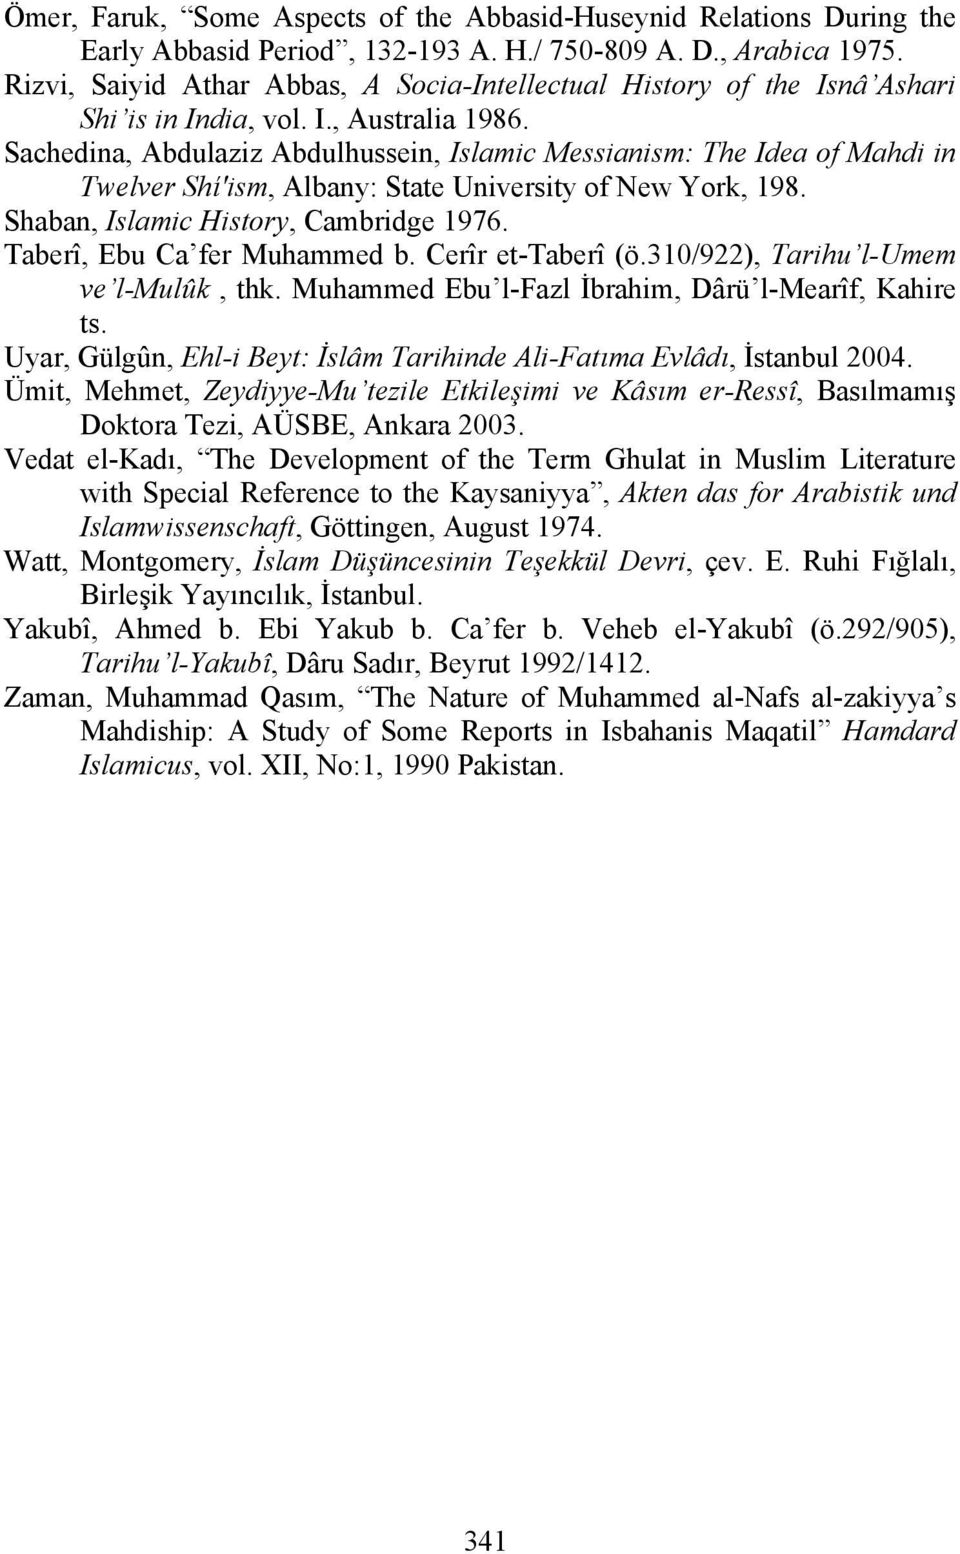 Sachedina, Abdulaziz Abdulhussein, Islamic Messianism: The Idea of Mahdi in Twelver Shí'ism, Albany: State University of New York, 198. Shaban, Islamic History, Cambridge 1976.